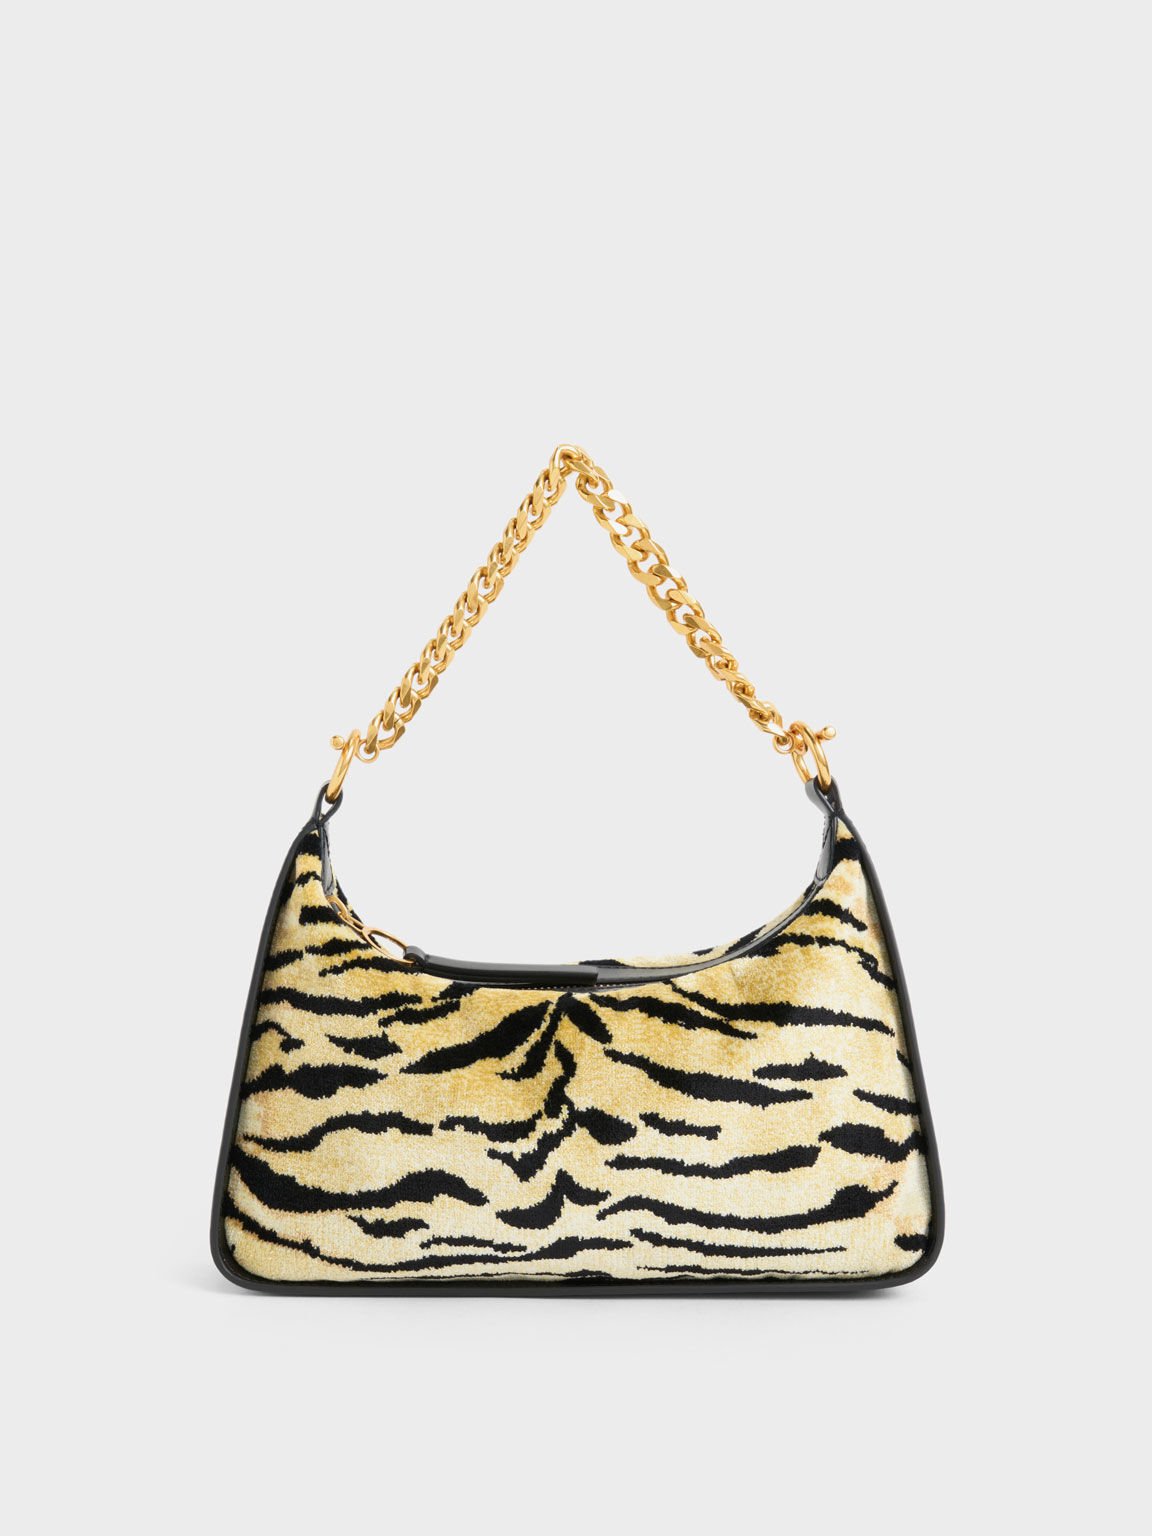 Prada Leopard print HandBag | Leopard print handbags, Leopard print  accessories, Prada handbags